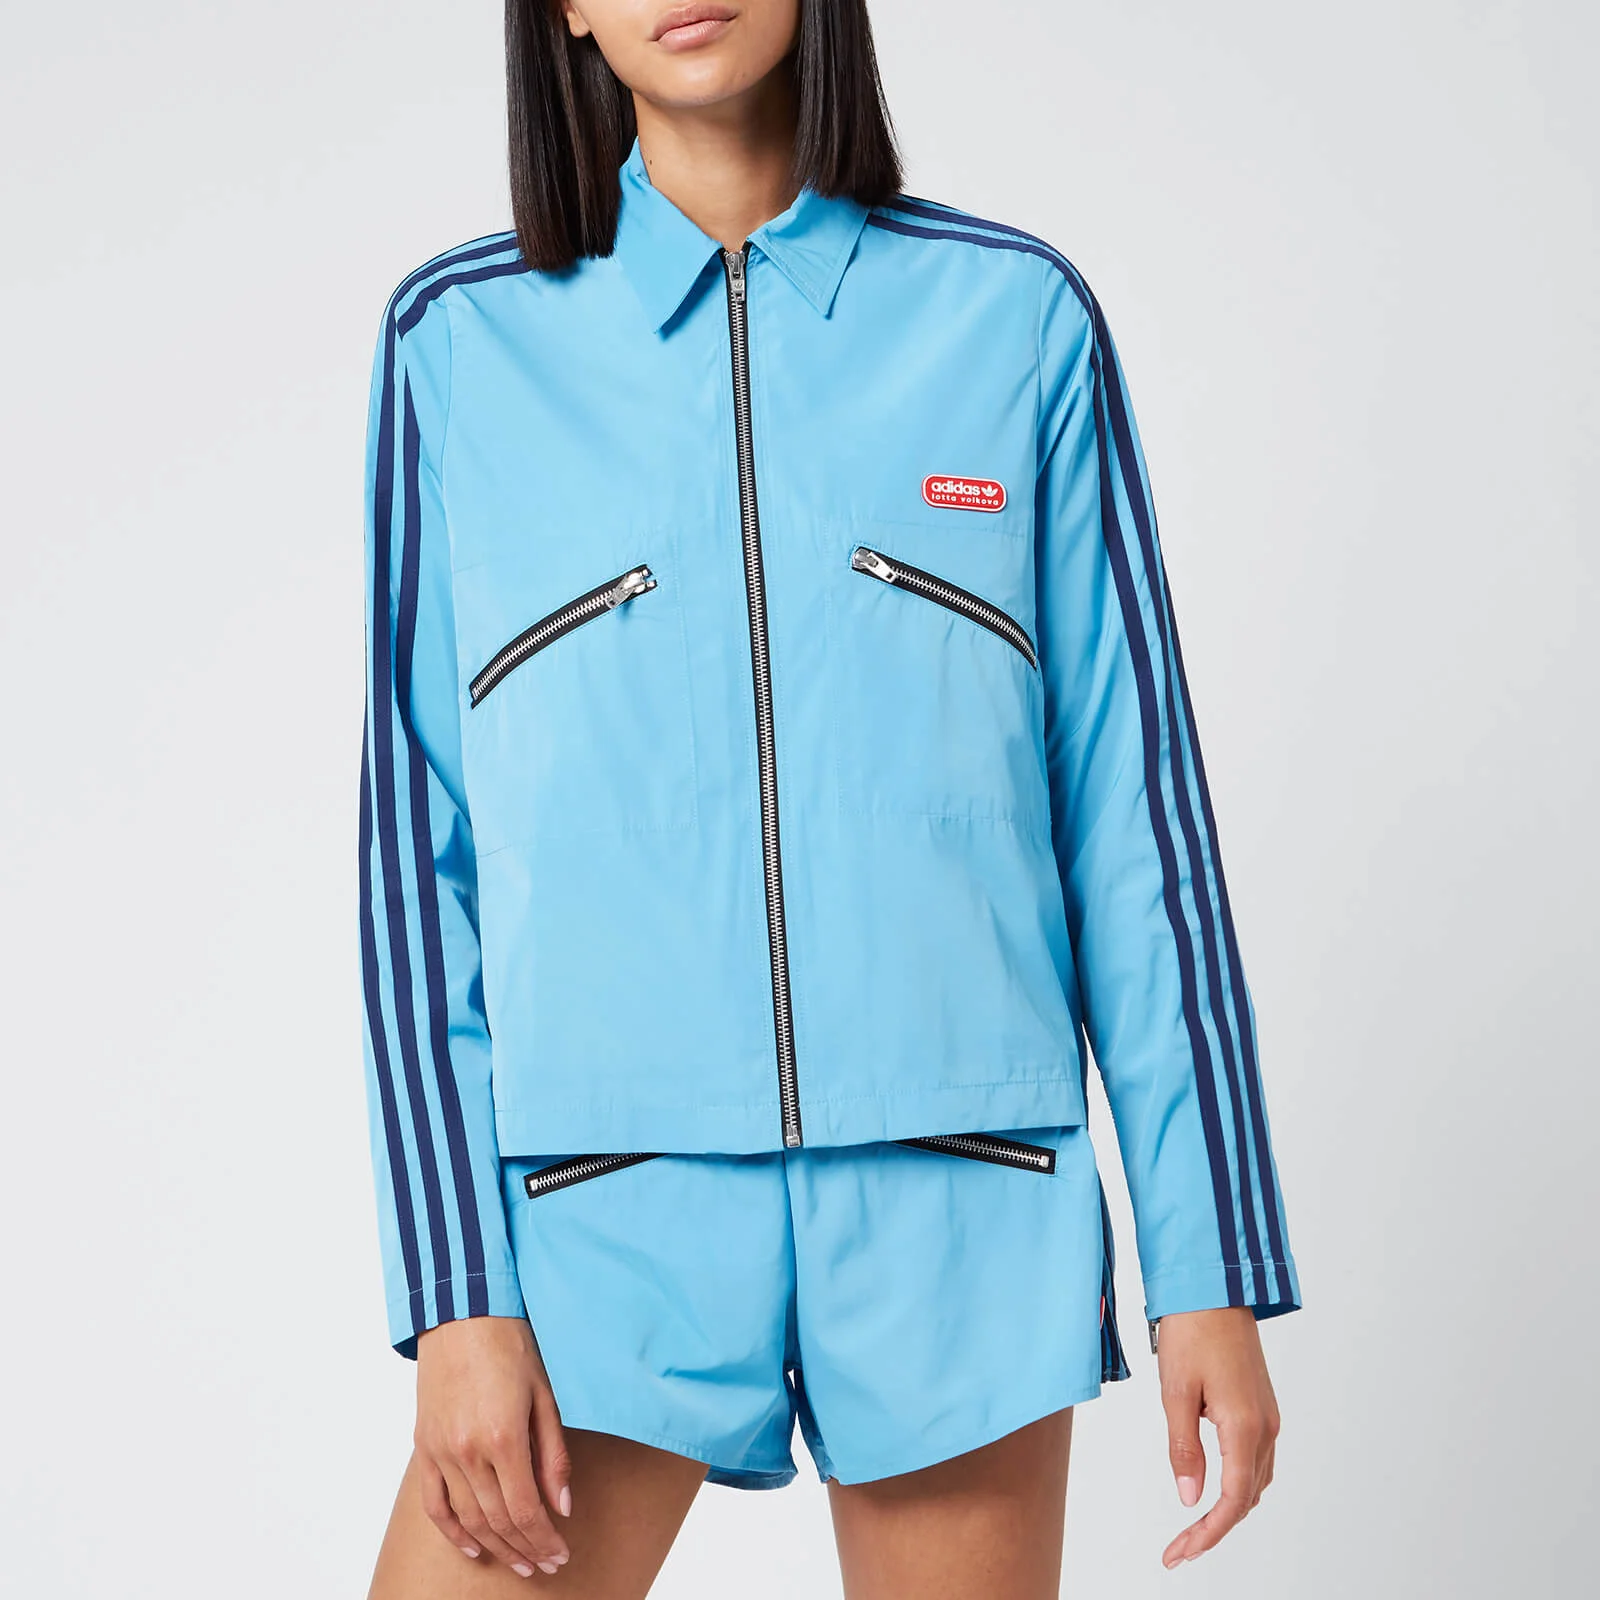 adidas X Lotta Volkova Women's Zip Shirt Jacket - Blue Image 1